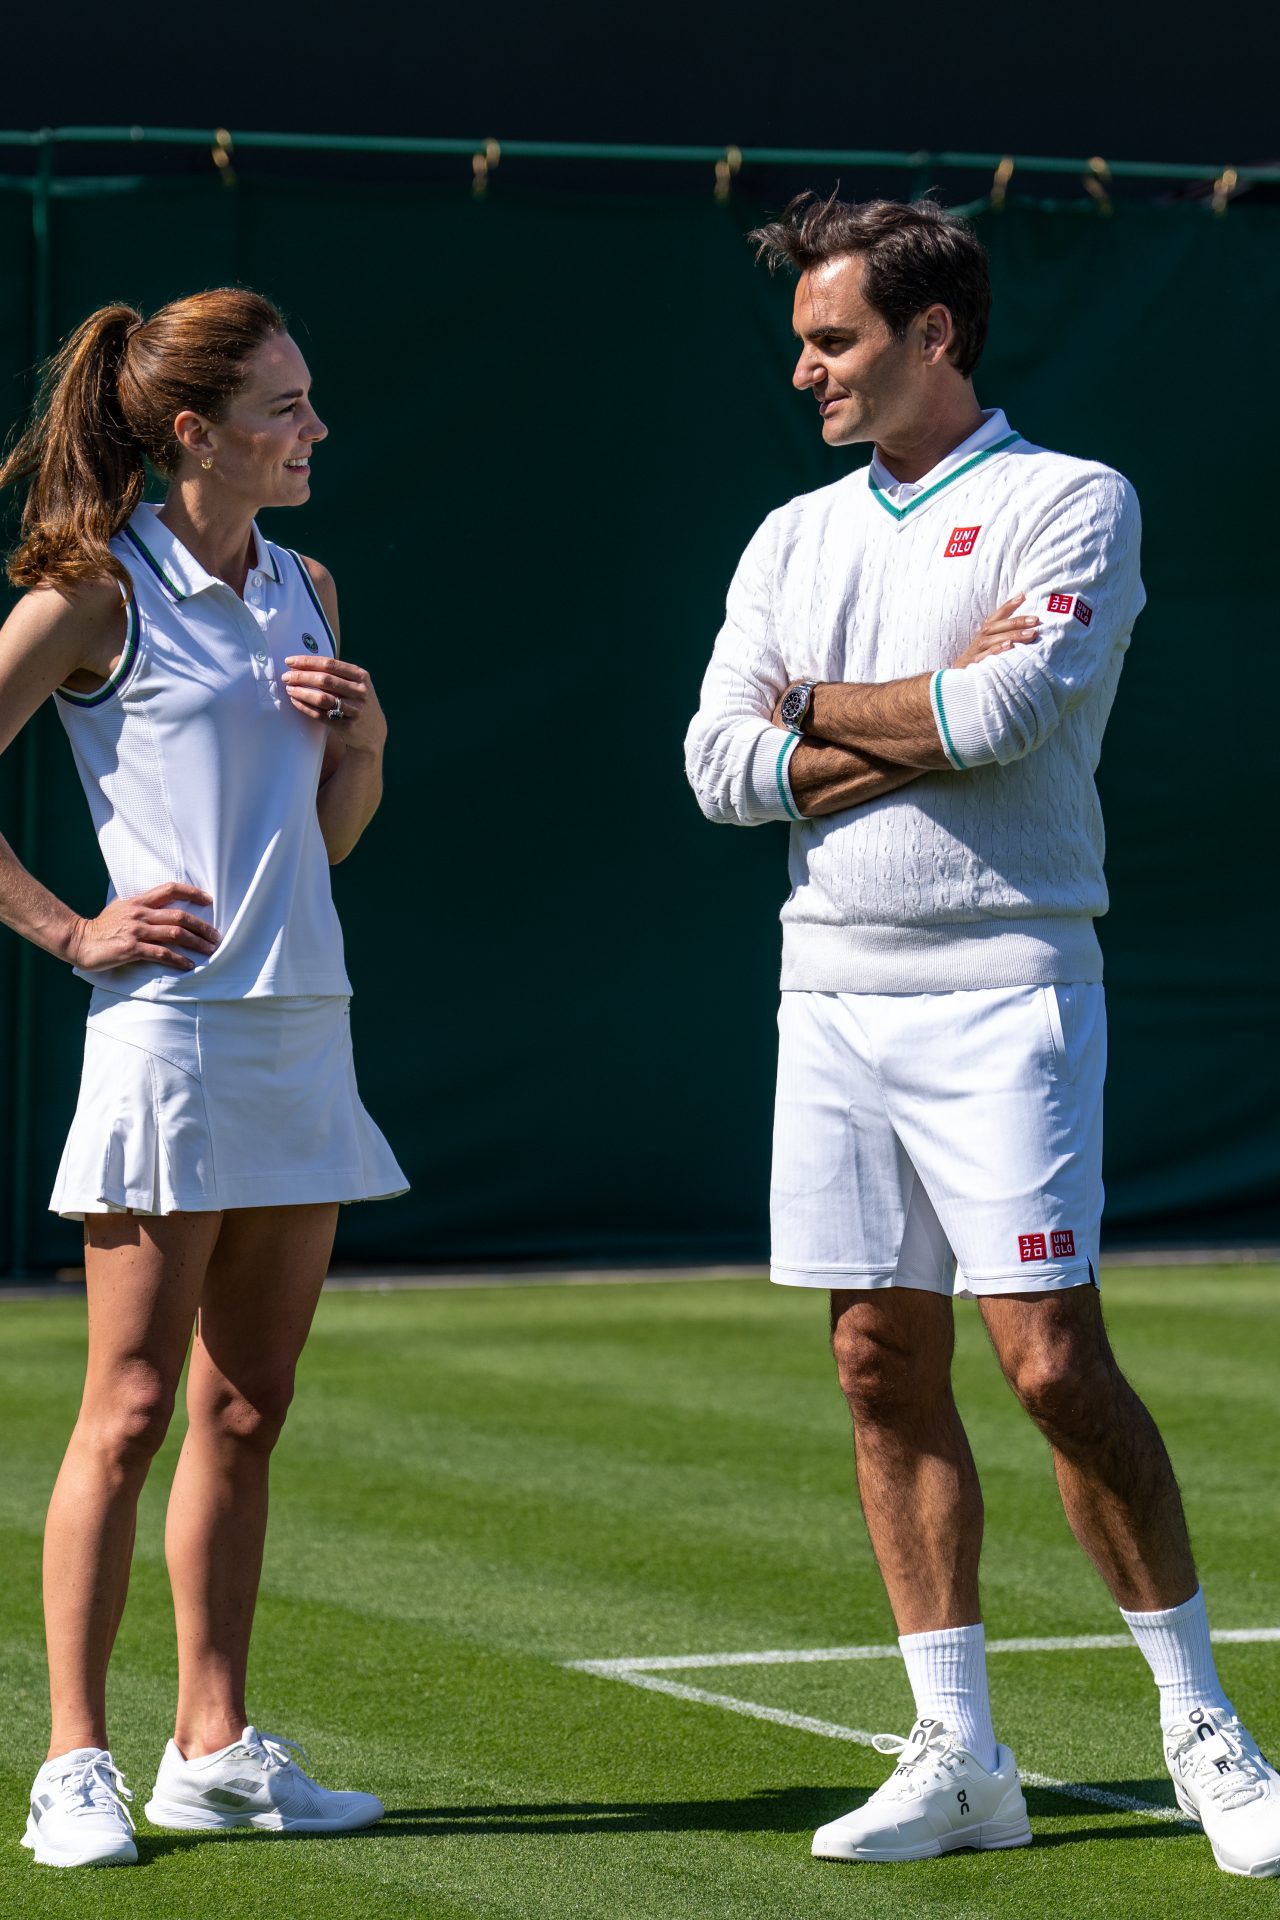 La princesse de Galles et Roger Federer